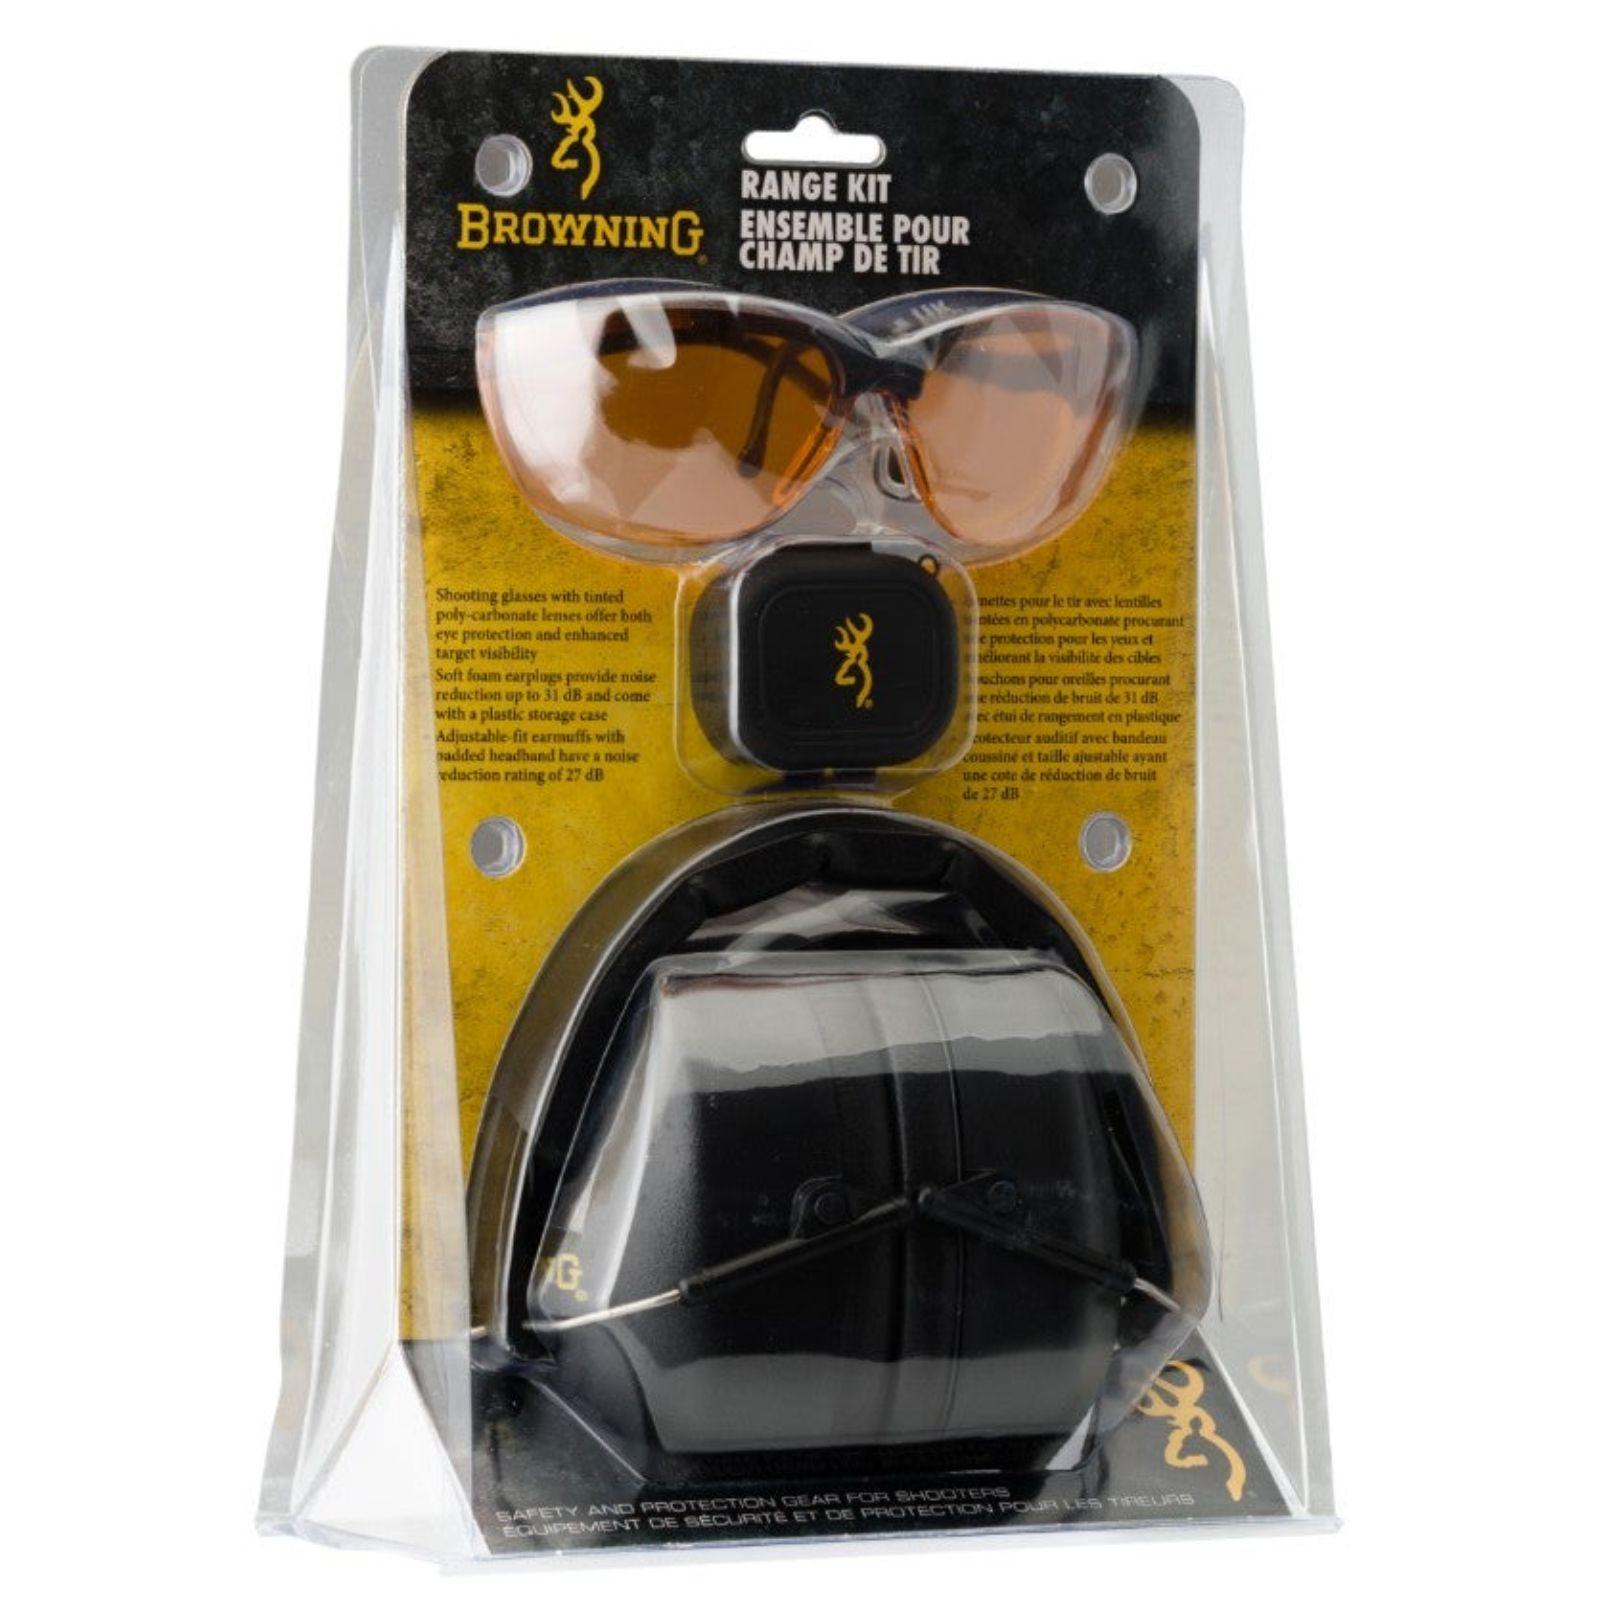 Browning Range Kit Ear and Eye Protection